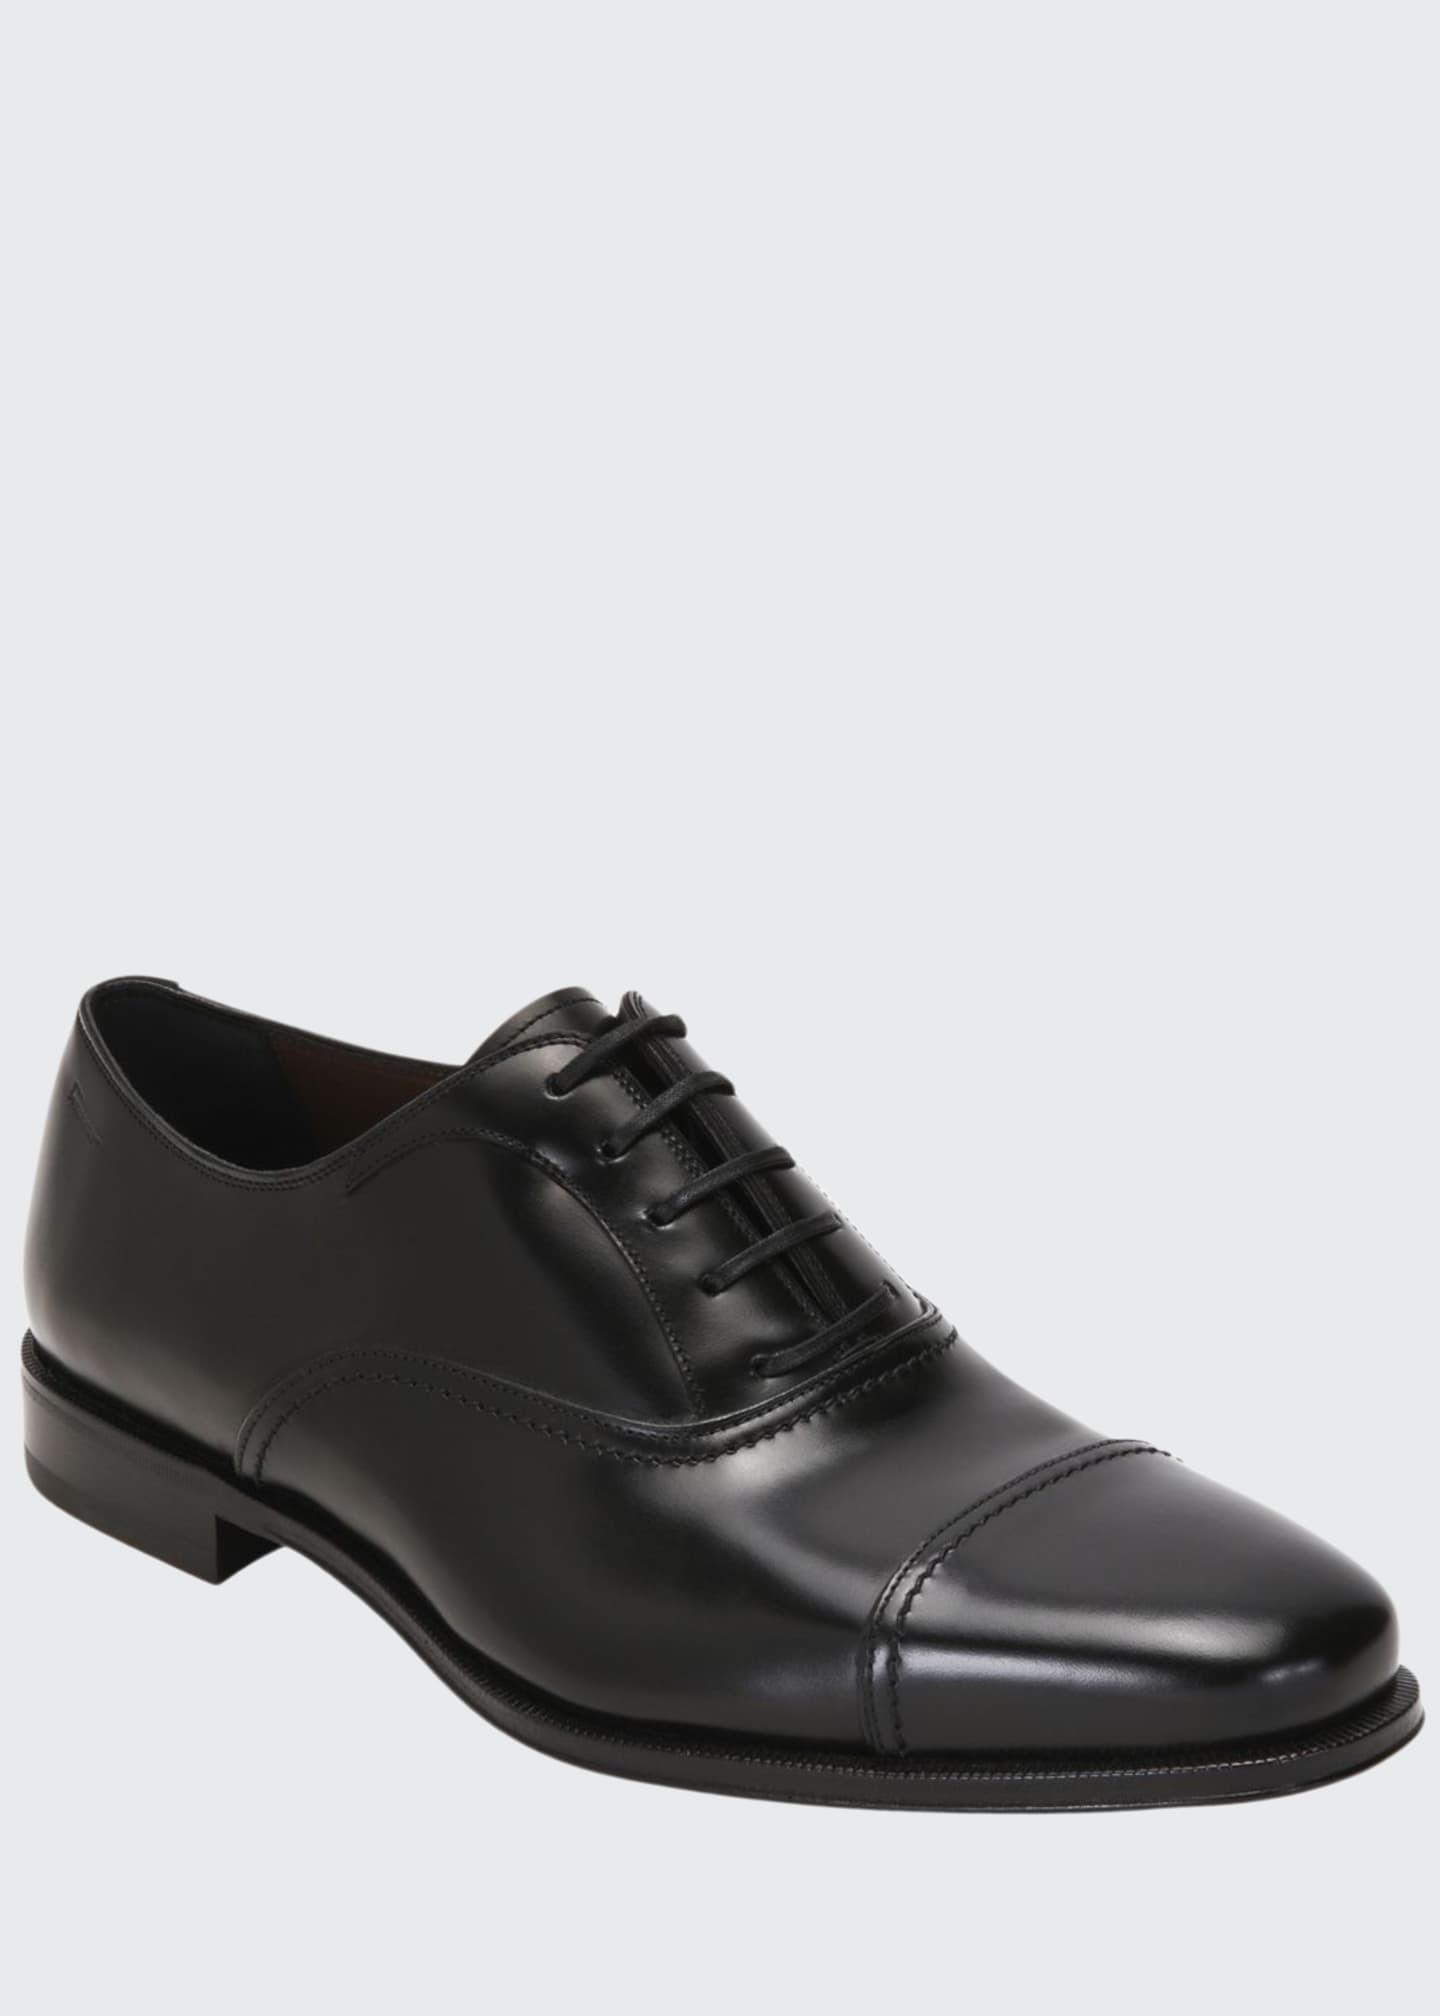 dilemma Moderator voor Ferragamo Men's Seul Leather Oxford Shoes - Bergdorf Goodman